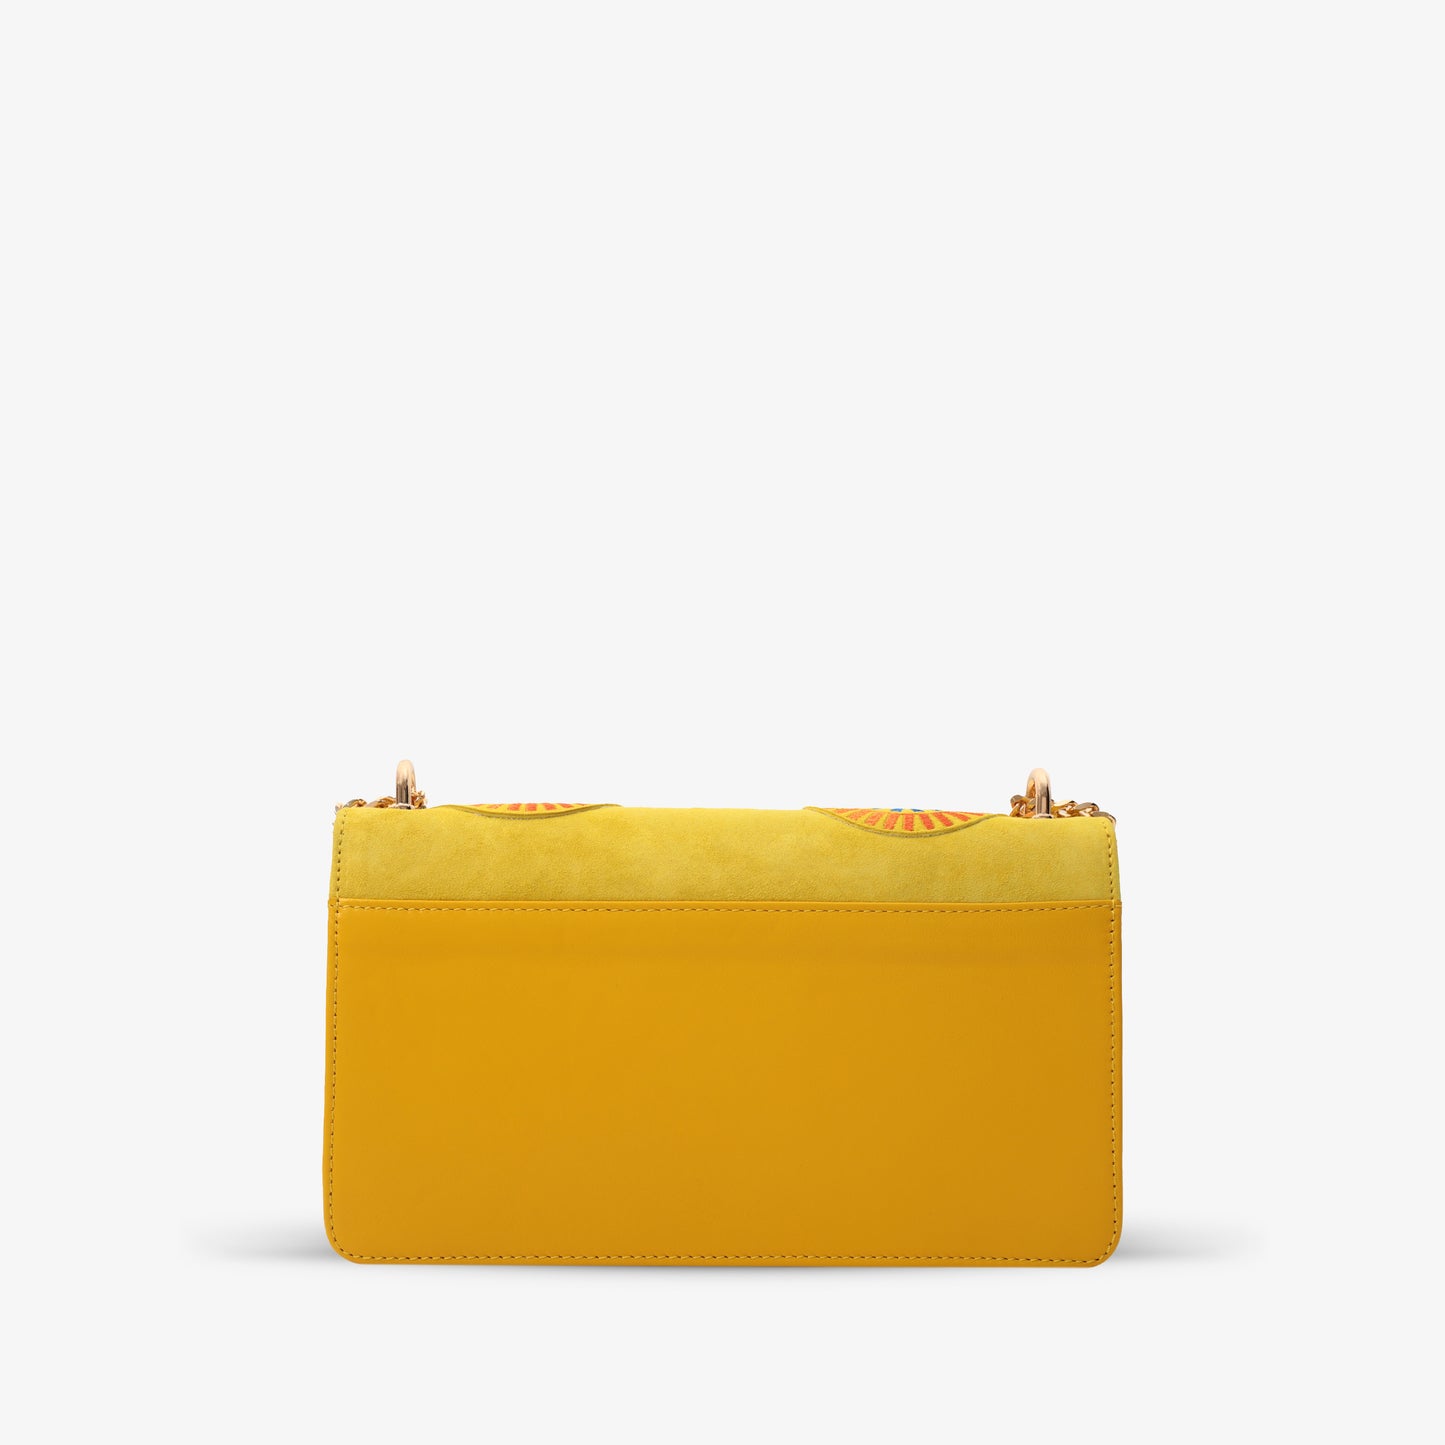 The Parama Yellow Leather Handbag